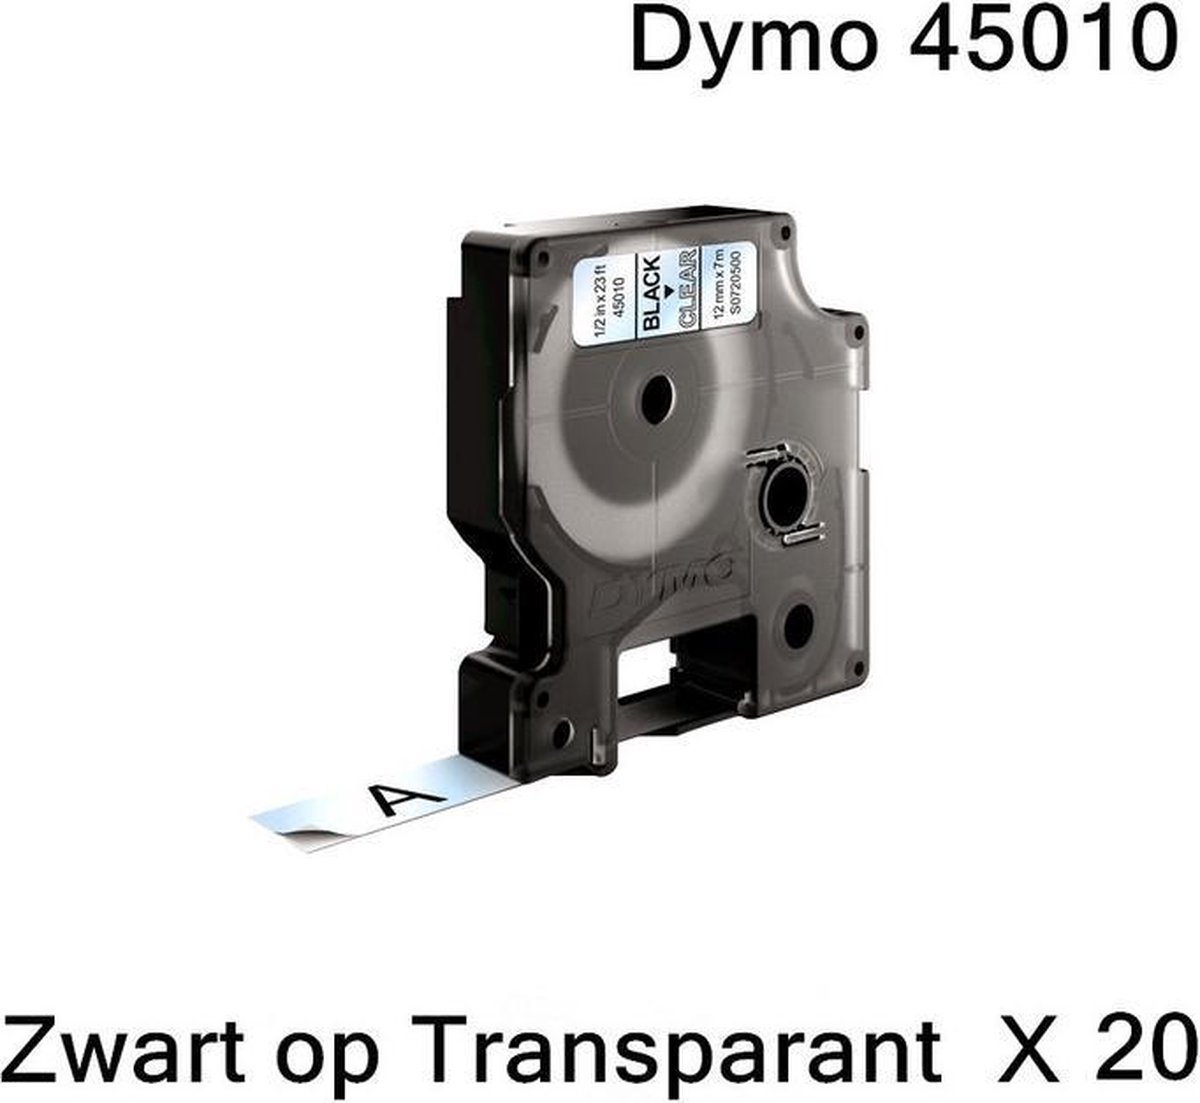 20 x Dymo 45010 Zwart op Transparant Standaard Label Tapes Compatible voor Dymo LabelManager 100 110 120P 150 160 PC2 200 210D 220P 260 260P 280 300 350 350D 360D 400 420P 450 / 12mm x 7m - Quick Supplies B.V.